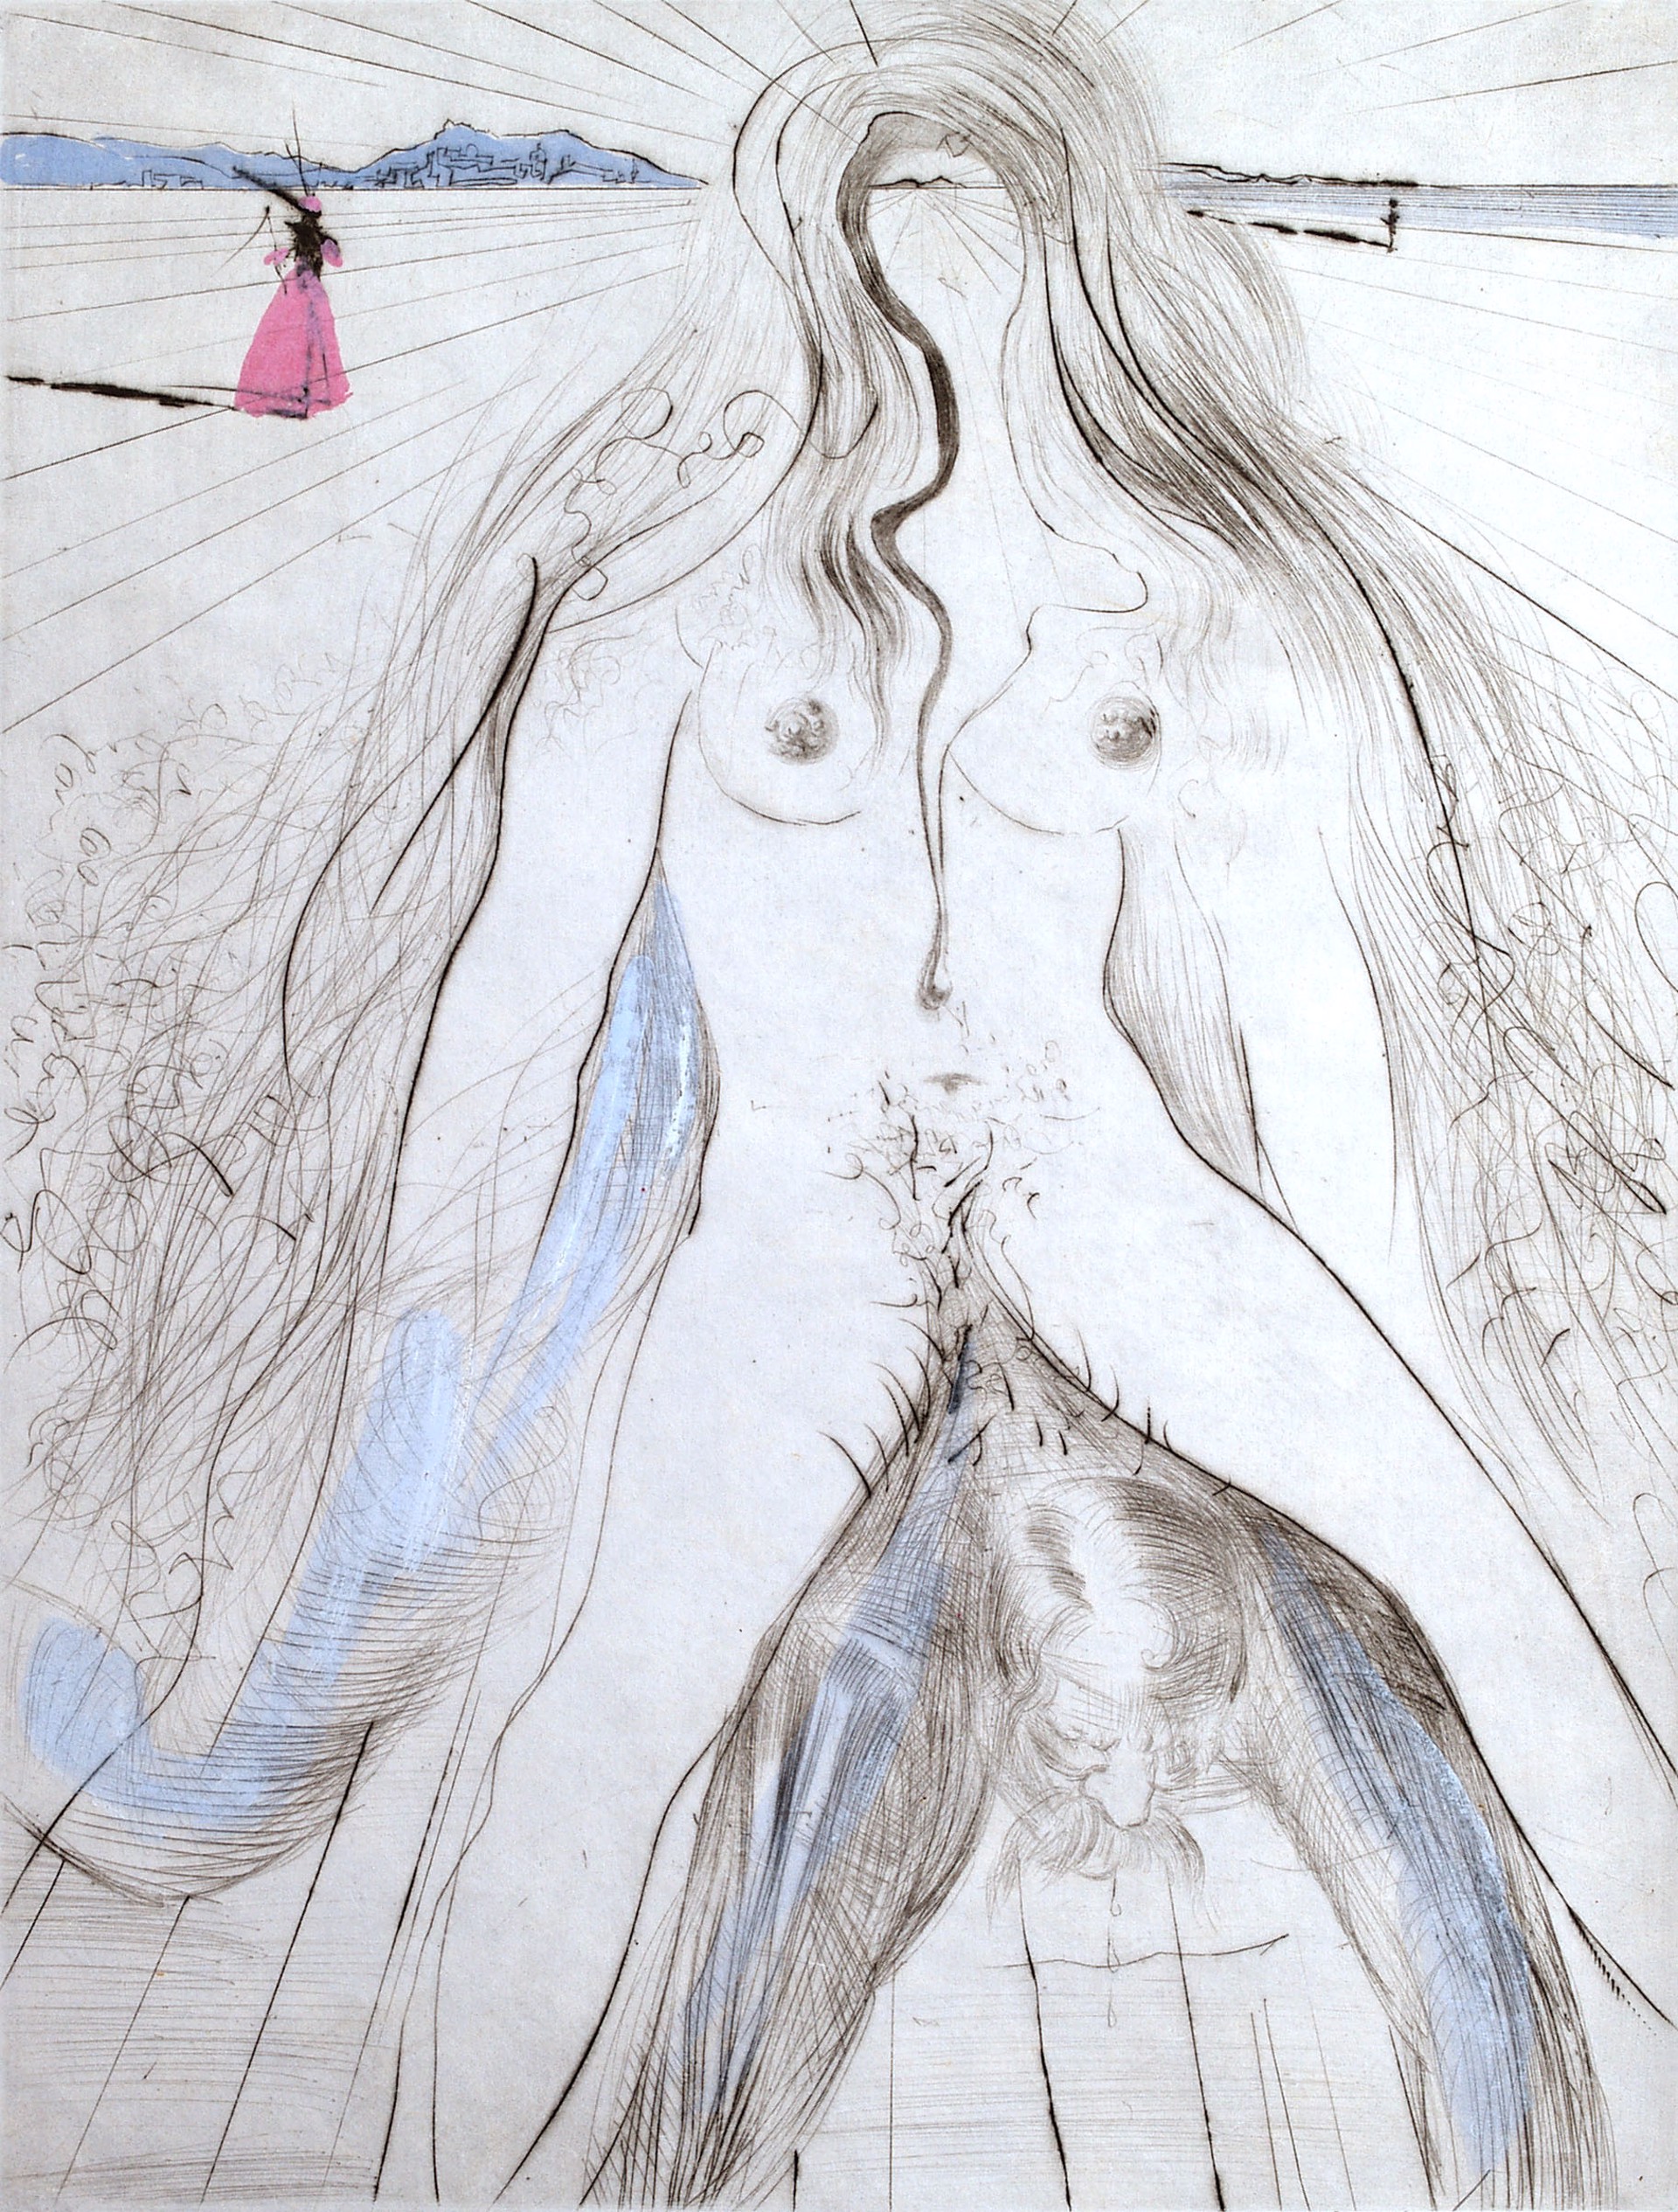 Venus in Furs "Woman on Horseback" by Salvador Dali